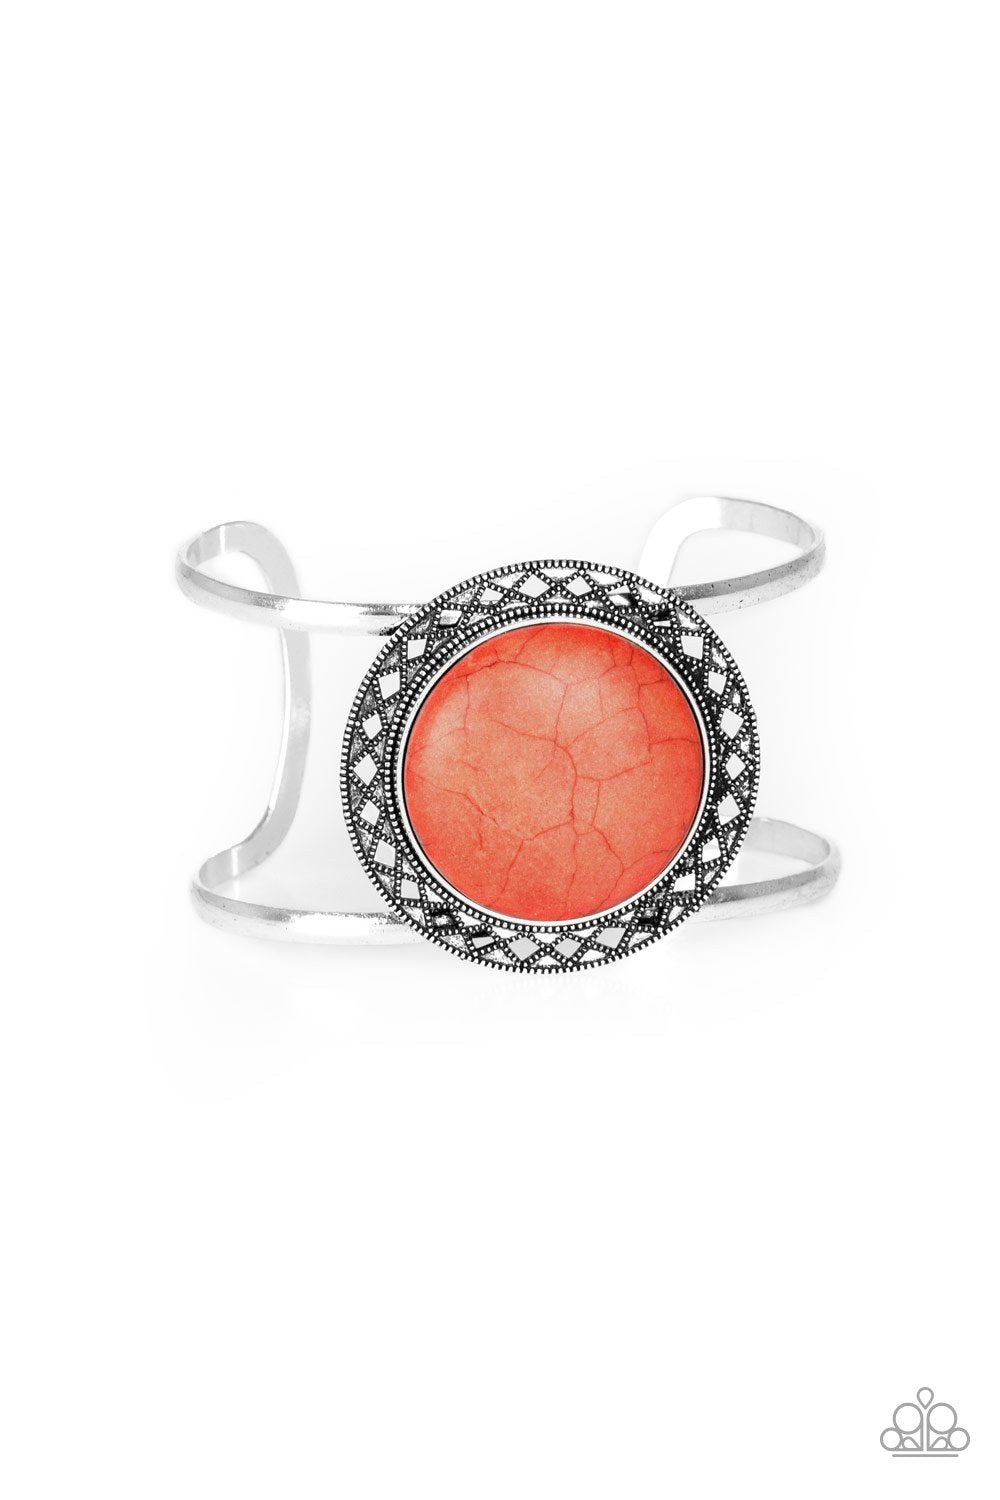 RODEO Rage Orange Stone Cuff Bracelet - Paparazzi Accessories - lightbox -CarasShop.com - $5 Jewelry by Cara Jewels